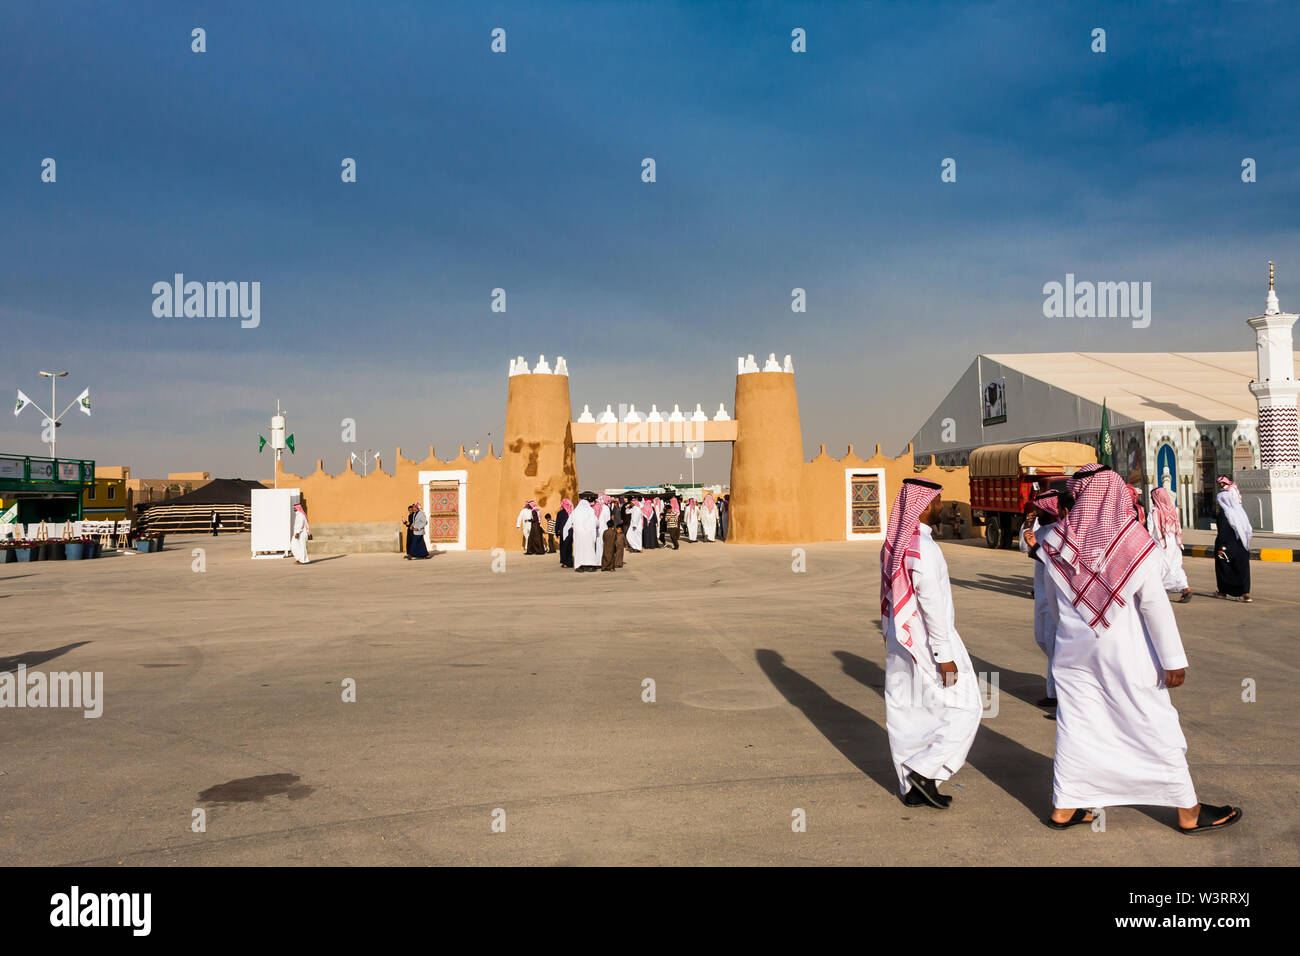 Inside Of The Janadriyah Festival Village Riyadh Stock Photo Alamy